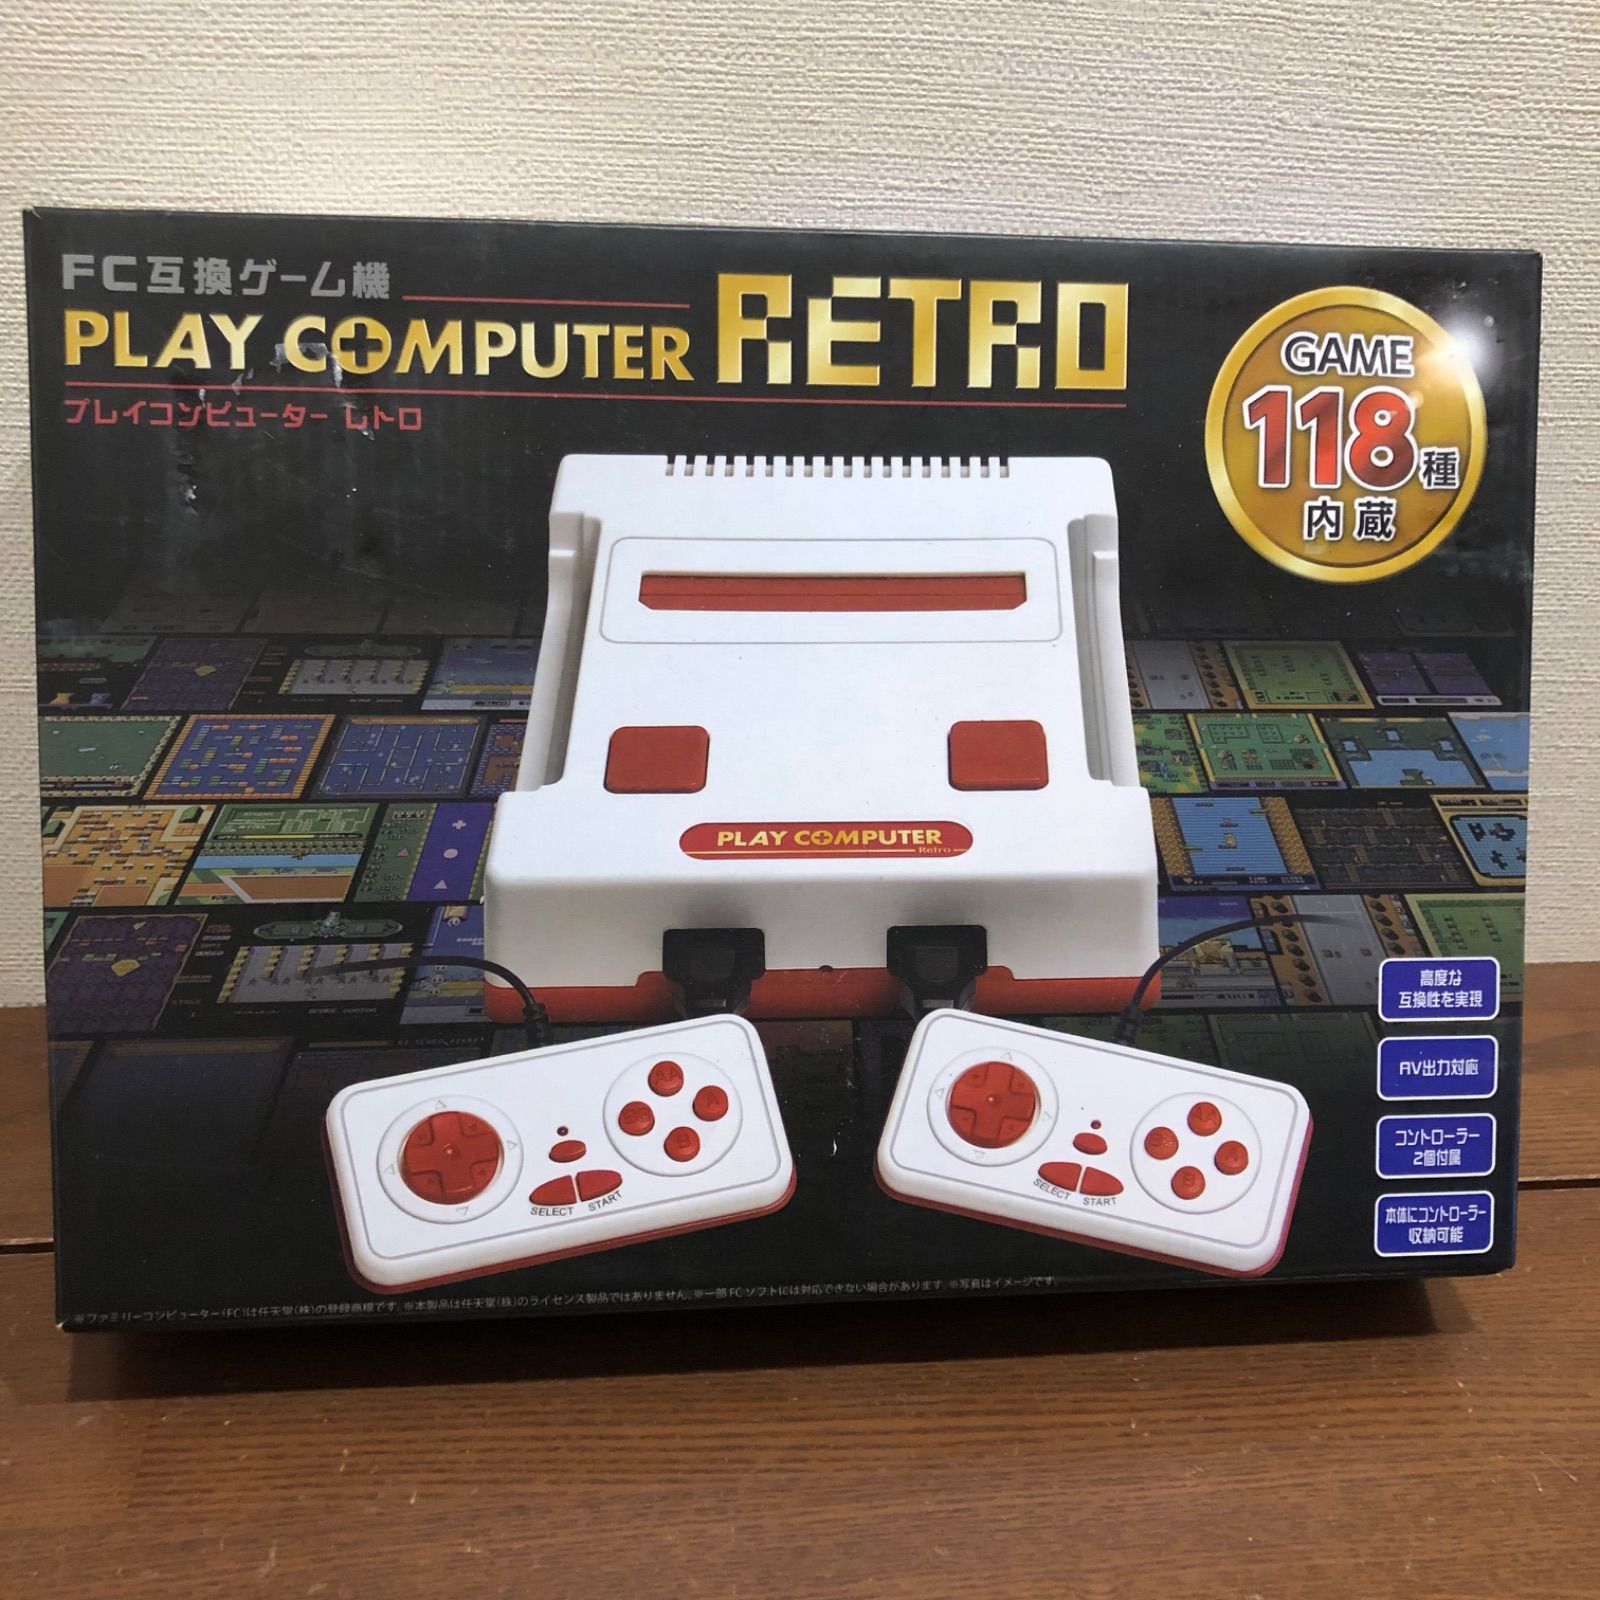 Play Computer RETRO プレイコンピュータ レトロ ゲーム118種内蔵 